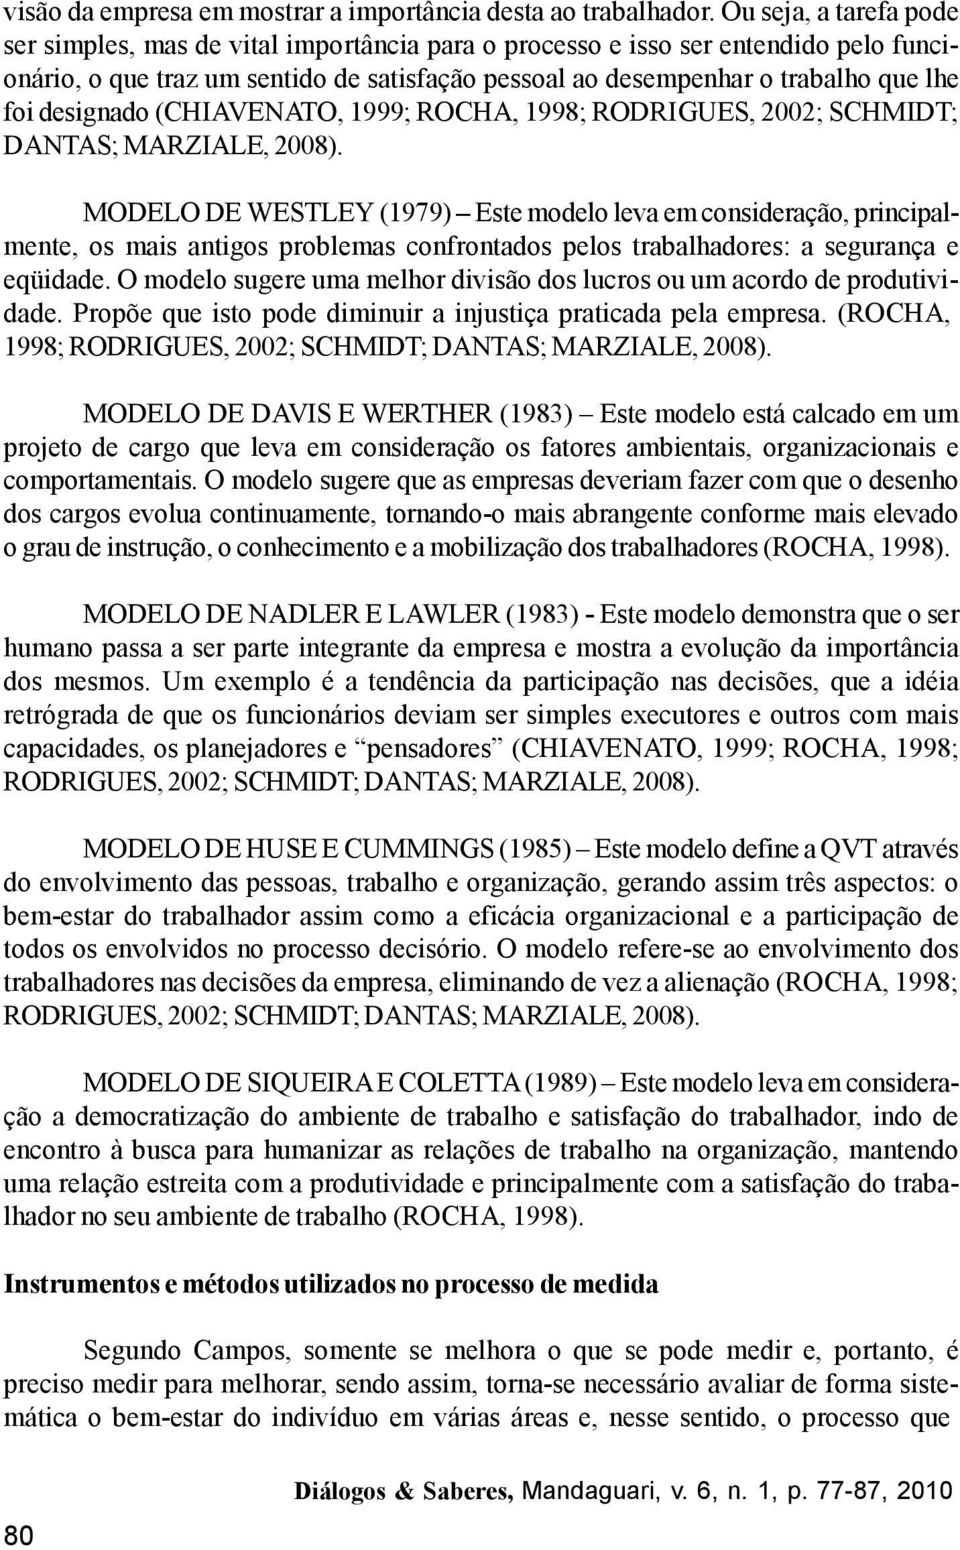 designado (CHIAVENATO, 1999; ROCHA, 1998; RODRIGUES, 2002; SCHMIDT; DANTAS; MARZIALE, 2008).